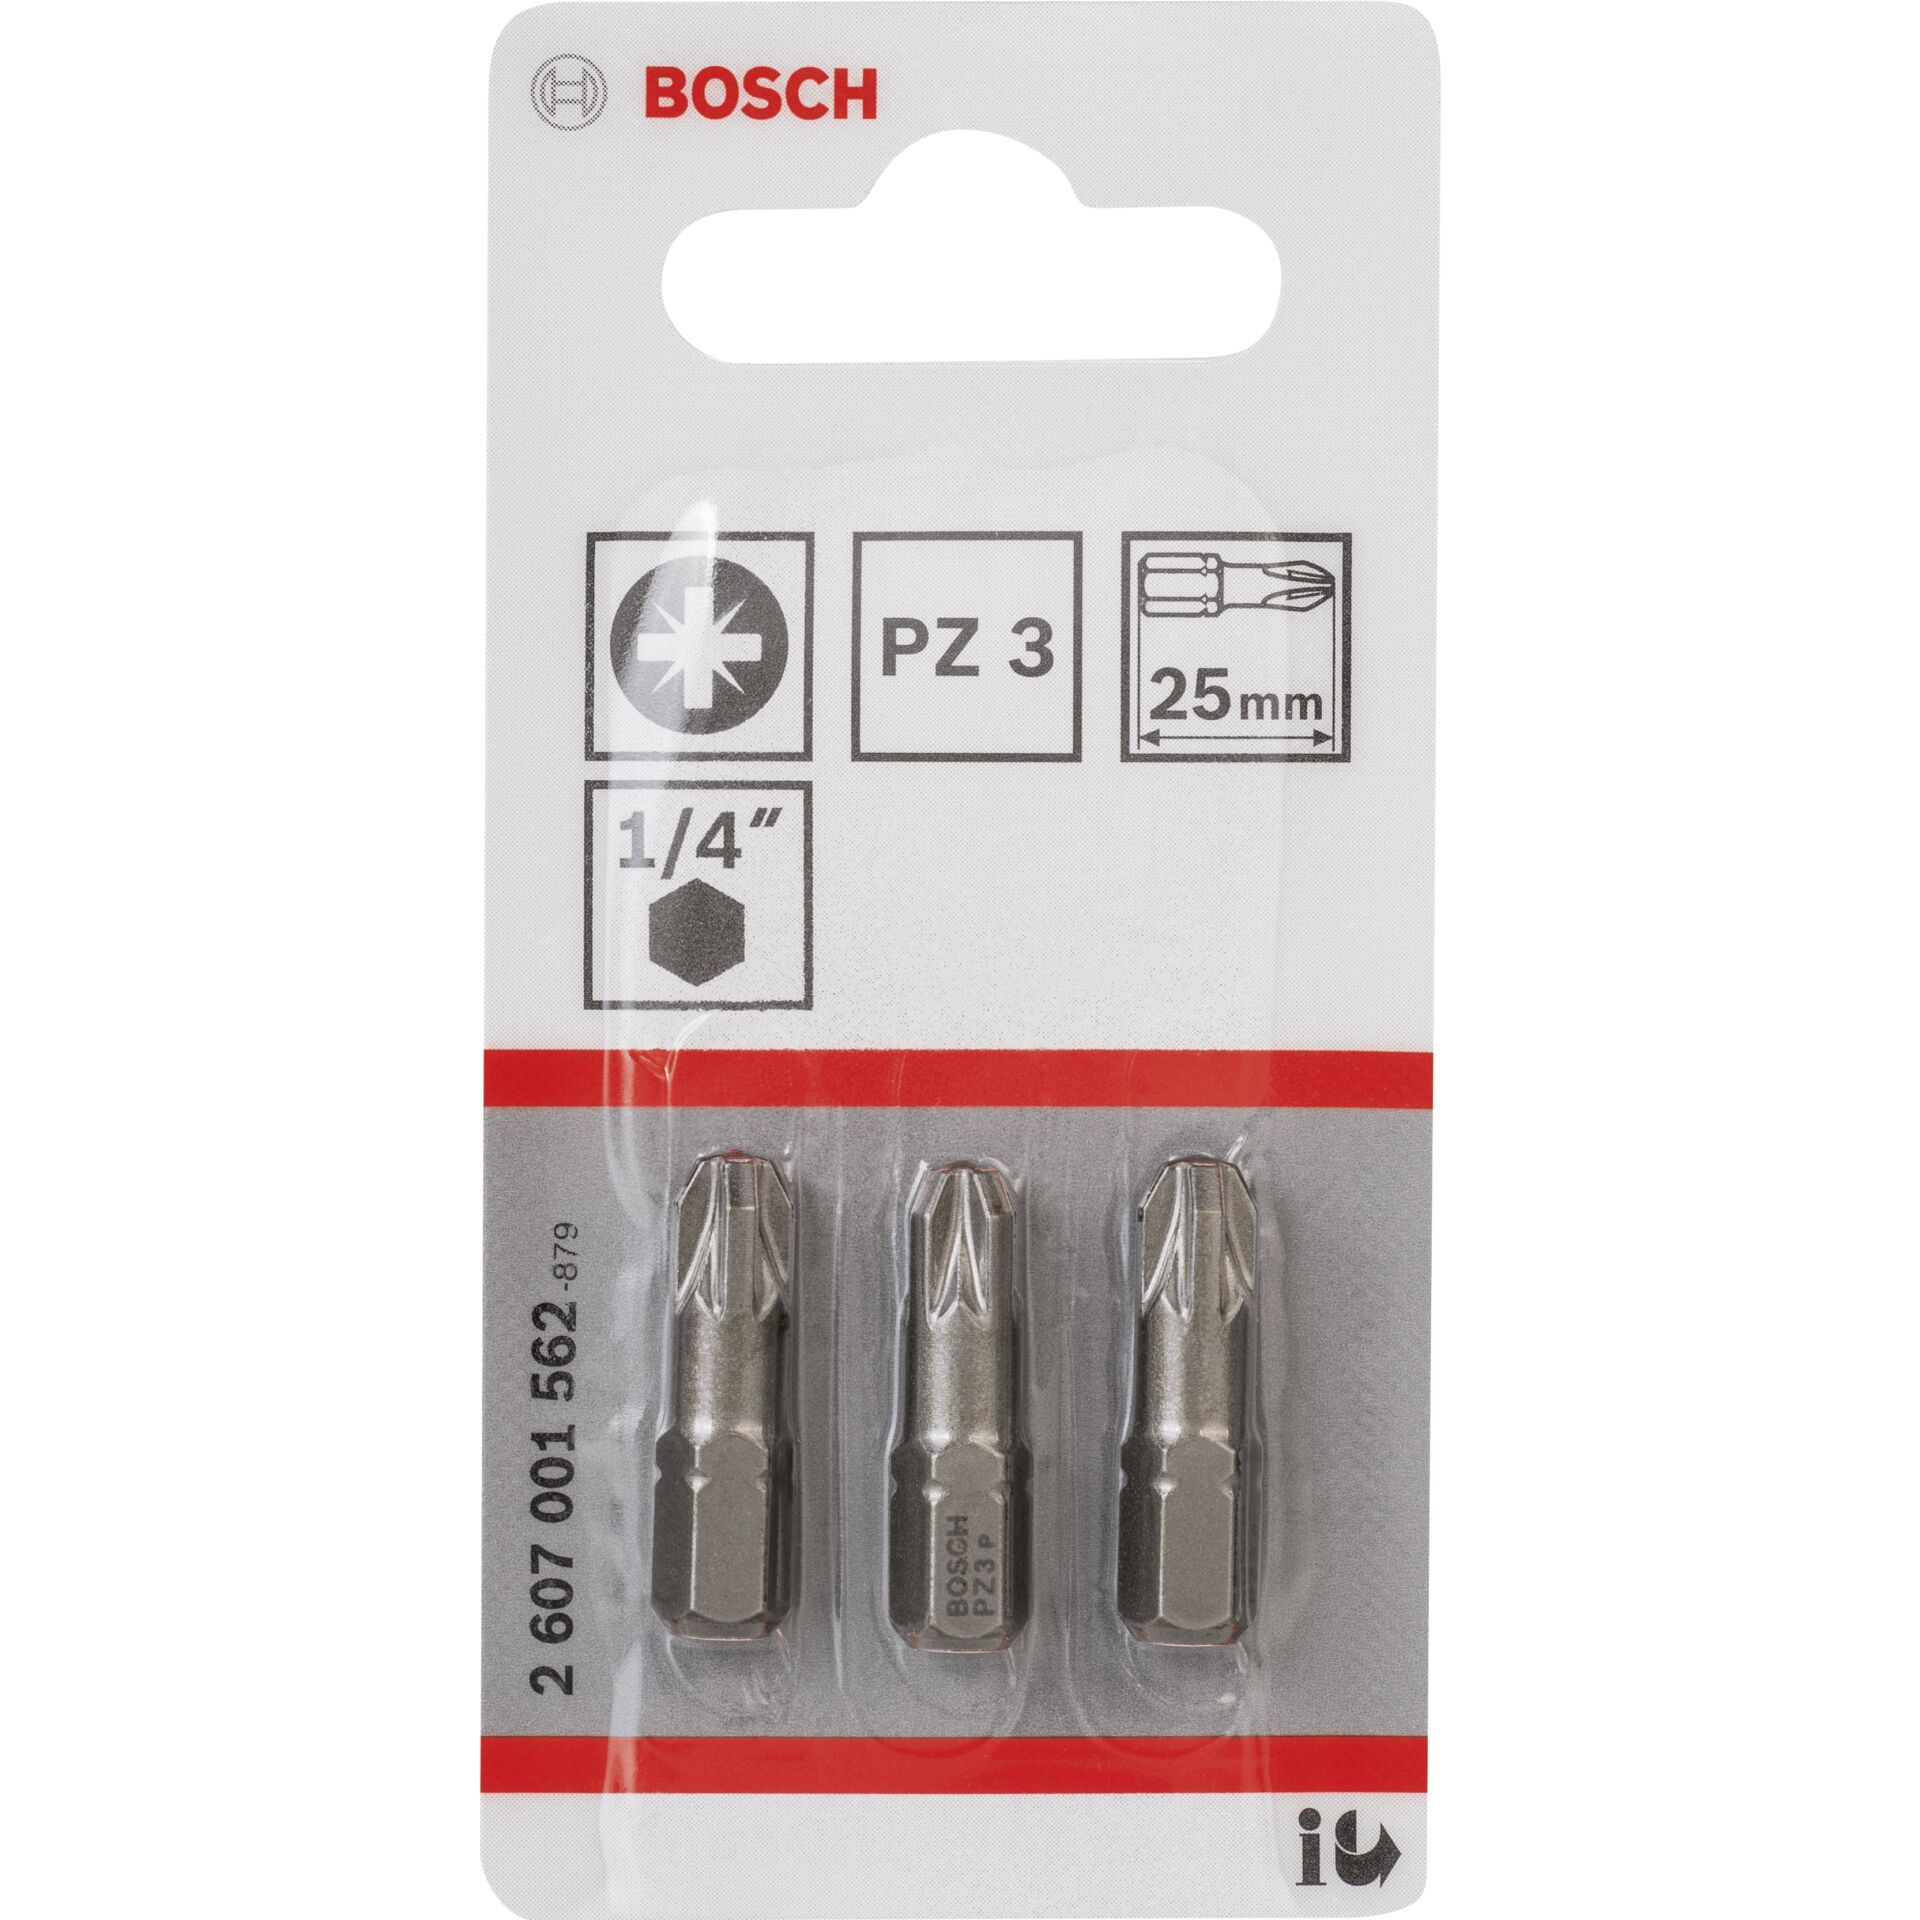 Bosch 3pcs PZ Screwdriver Bit PH3 XH 25mm